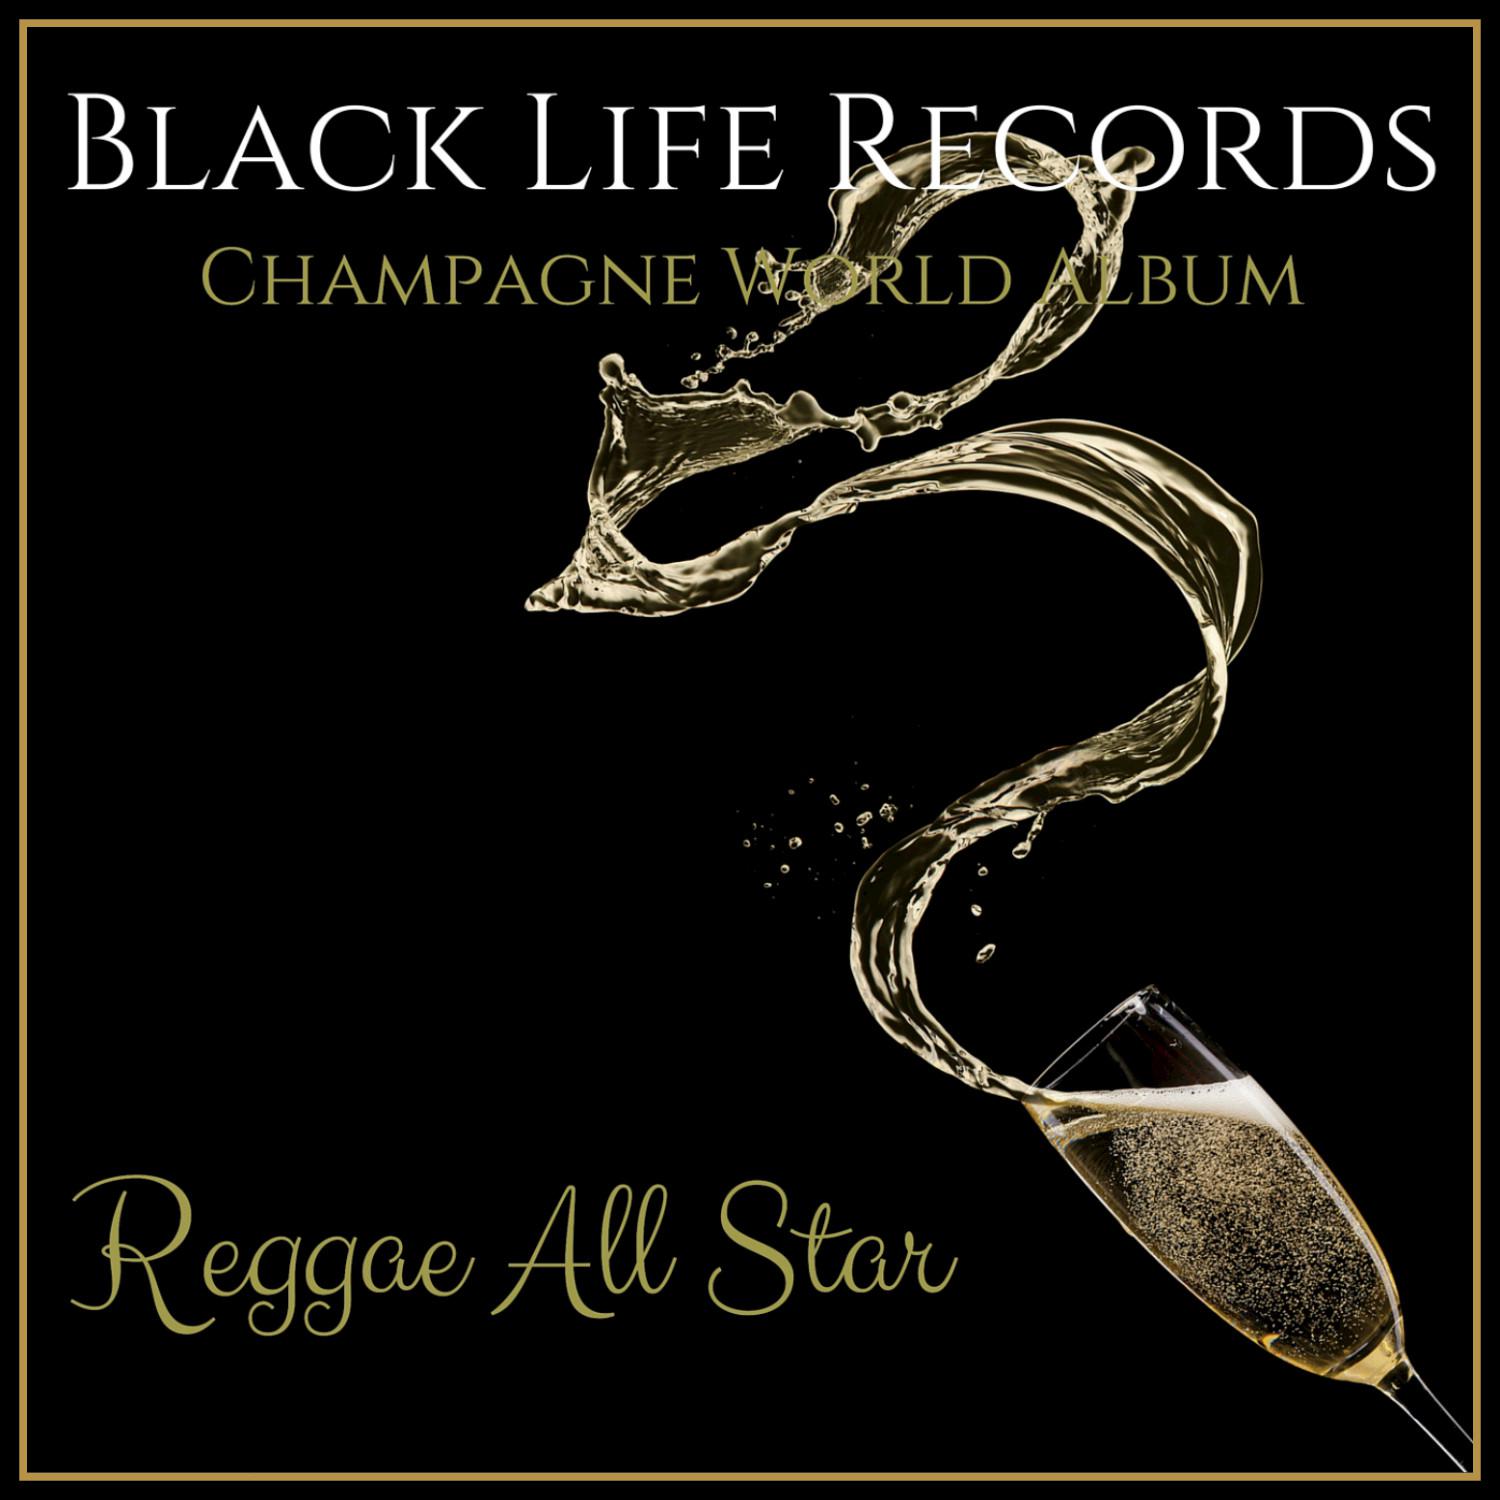 Champagne World Album - Reggae All Star